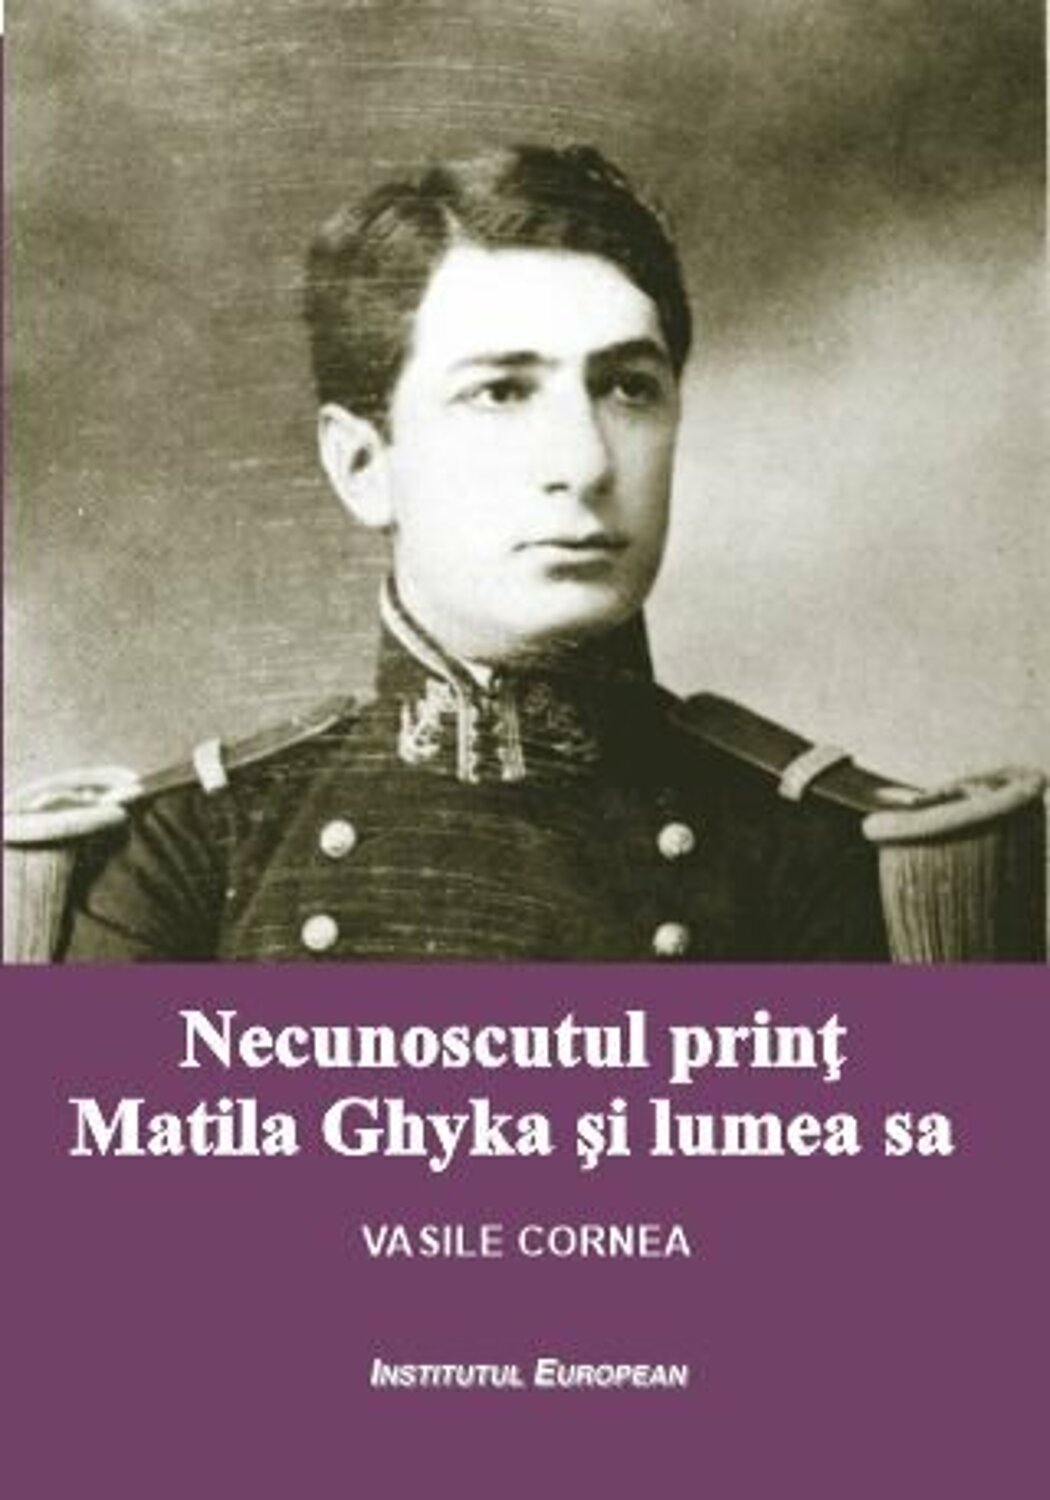 Necunoscutul print Matila Ghyka si lumea sa | Vasile Cornea Biografii